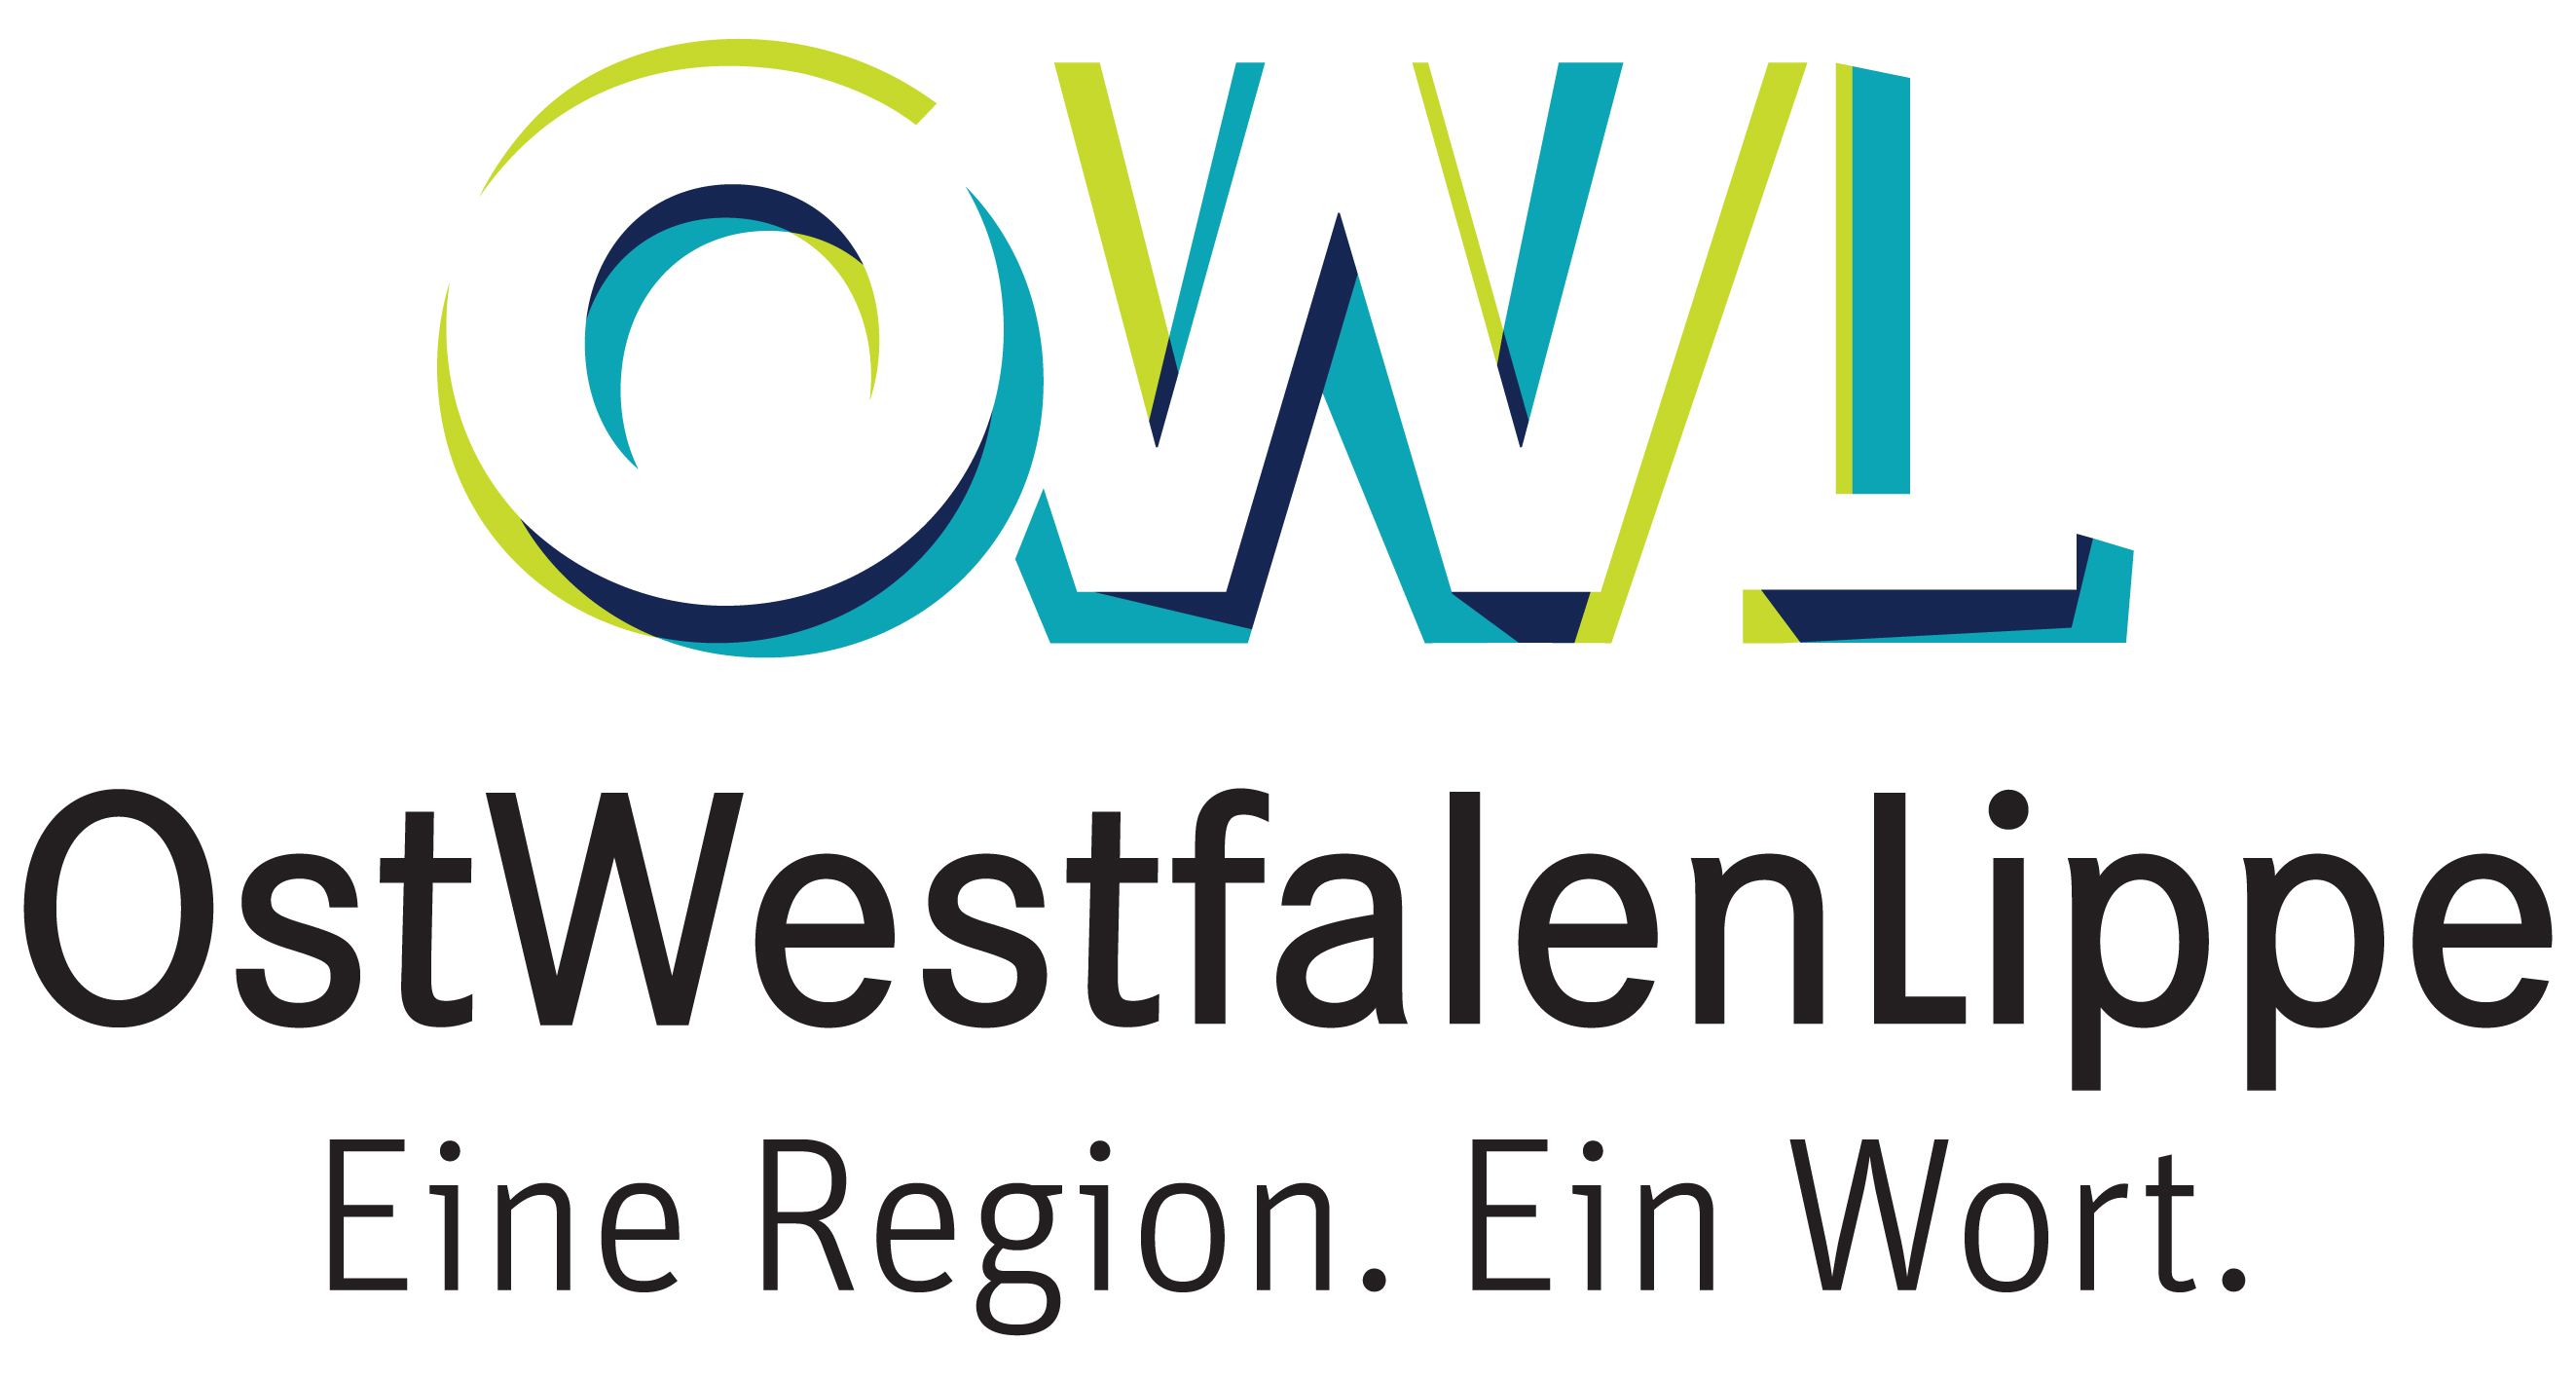 OstWestfalenLippe GmbH